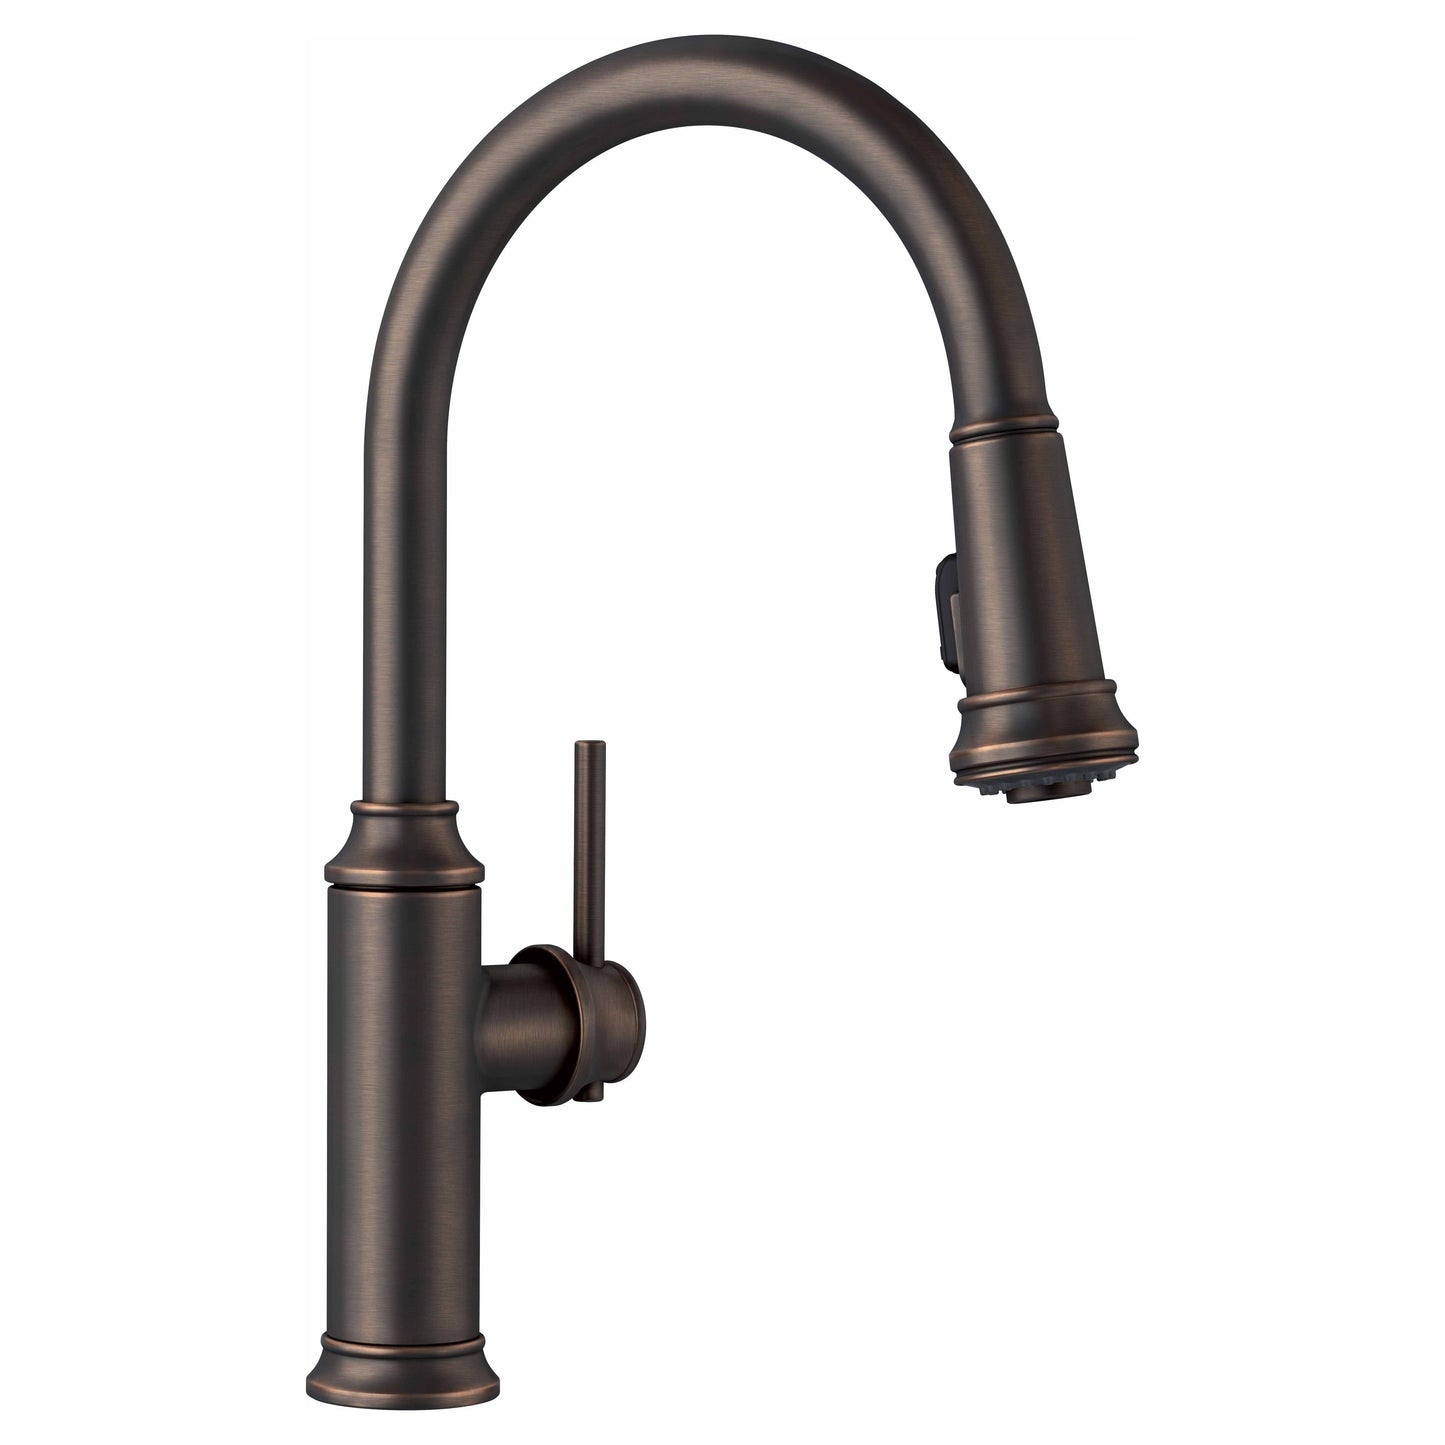 Blanco 442503 Empressa 1.5 GPM High Arc Pull-Down Dual Spray Kitchen Faucet in Oil-Rubbed Bronze